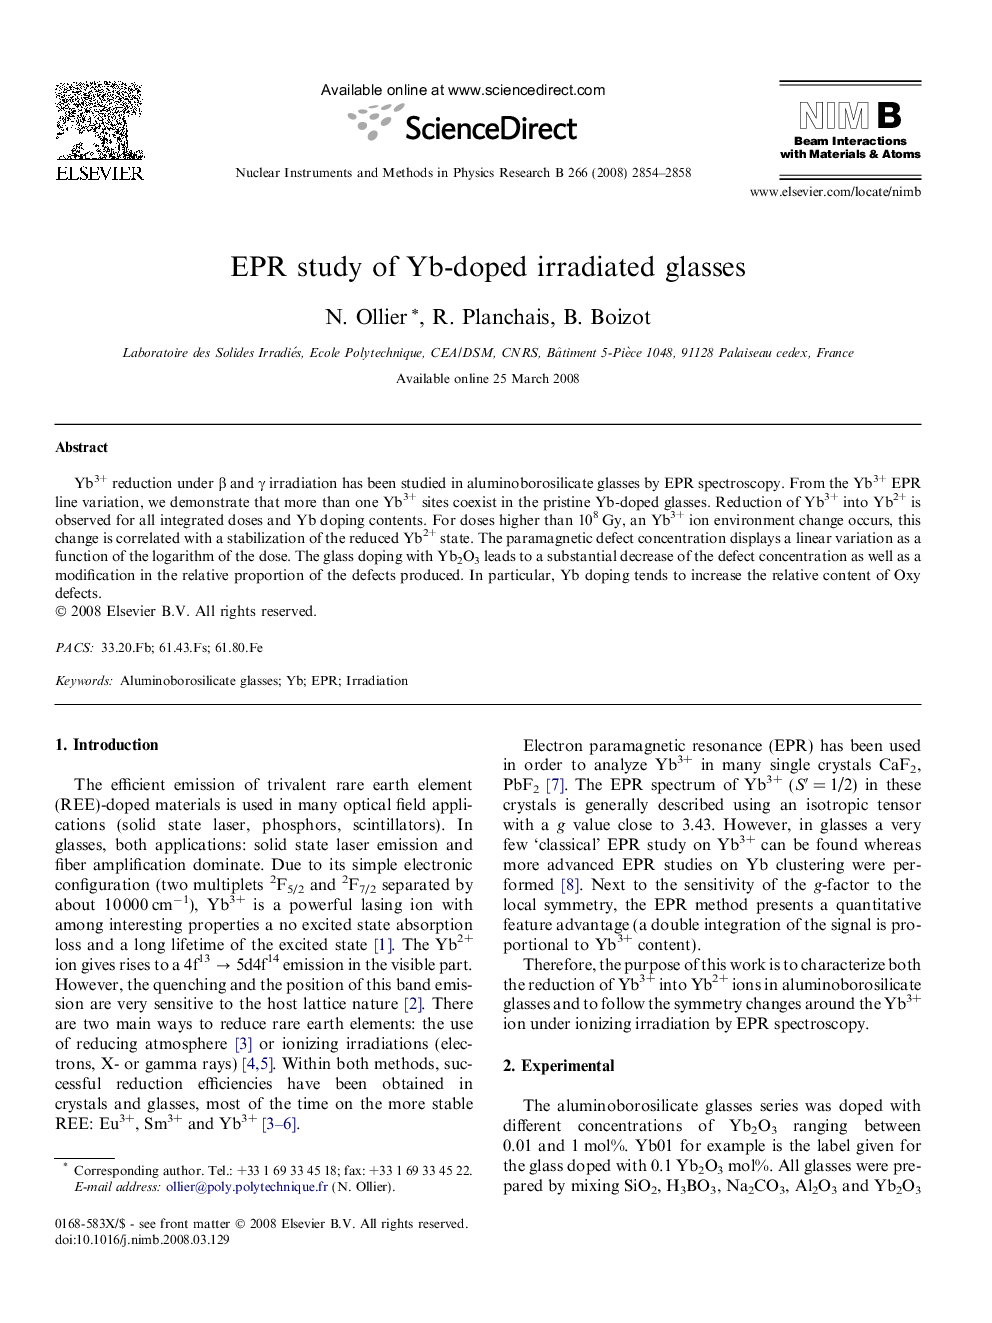 EPR study of Yb-doped irradiated glasses